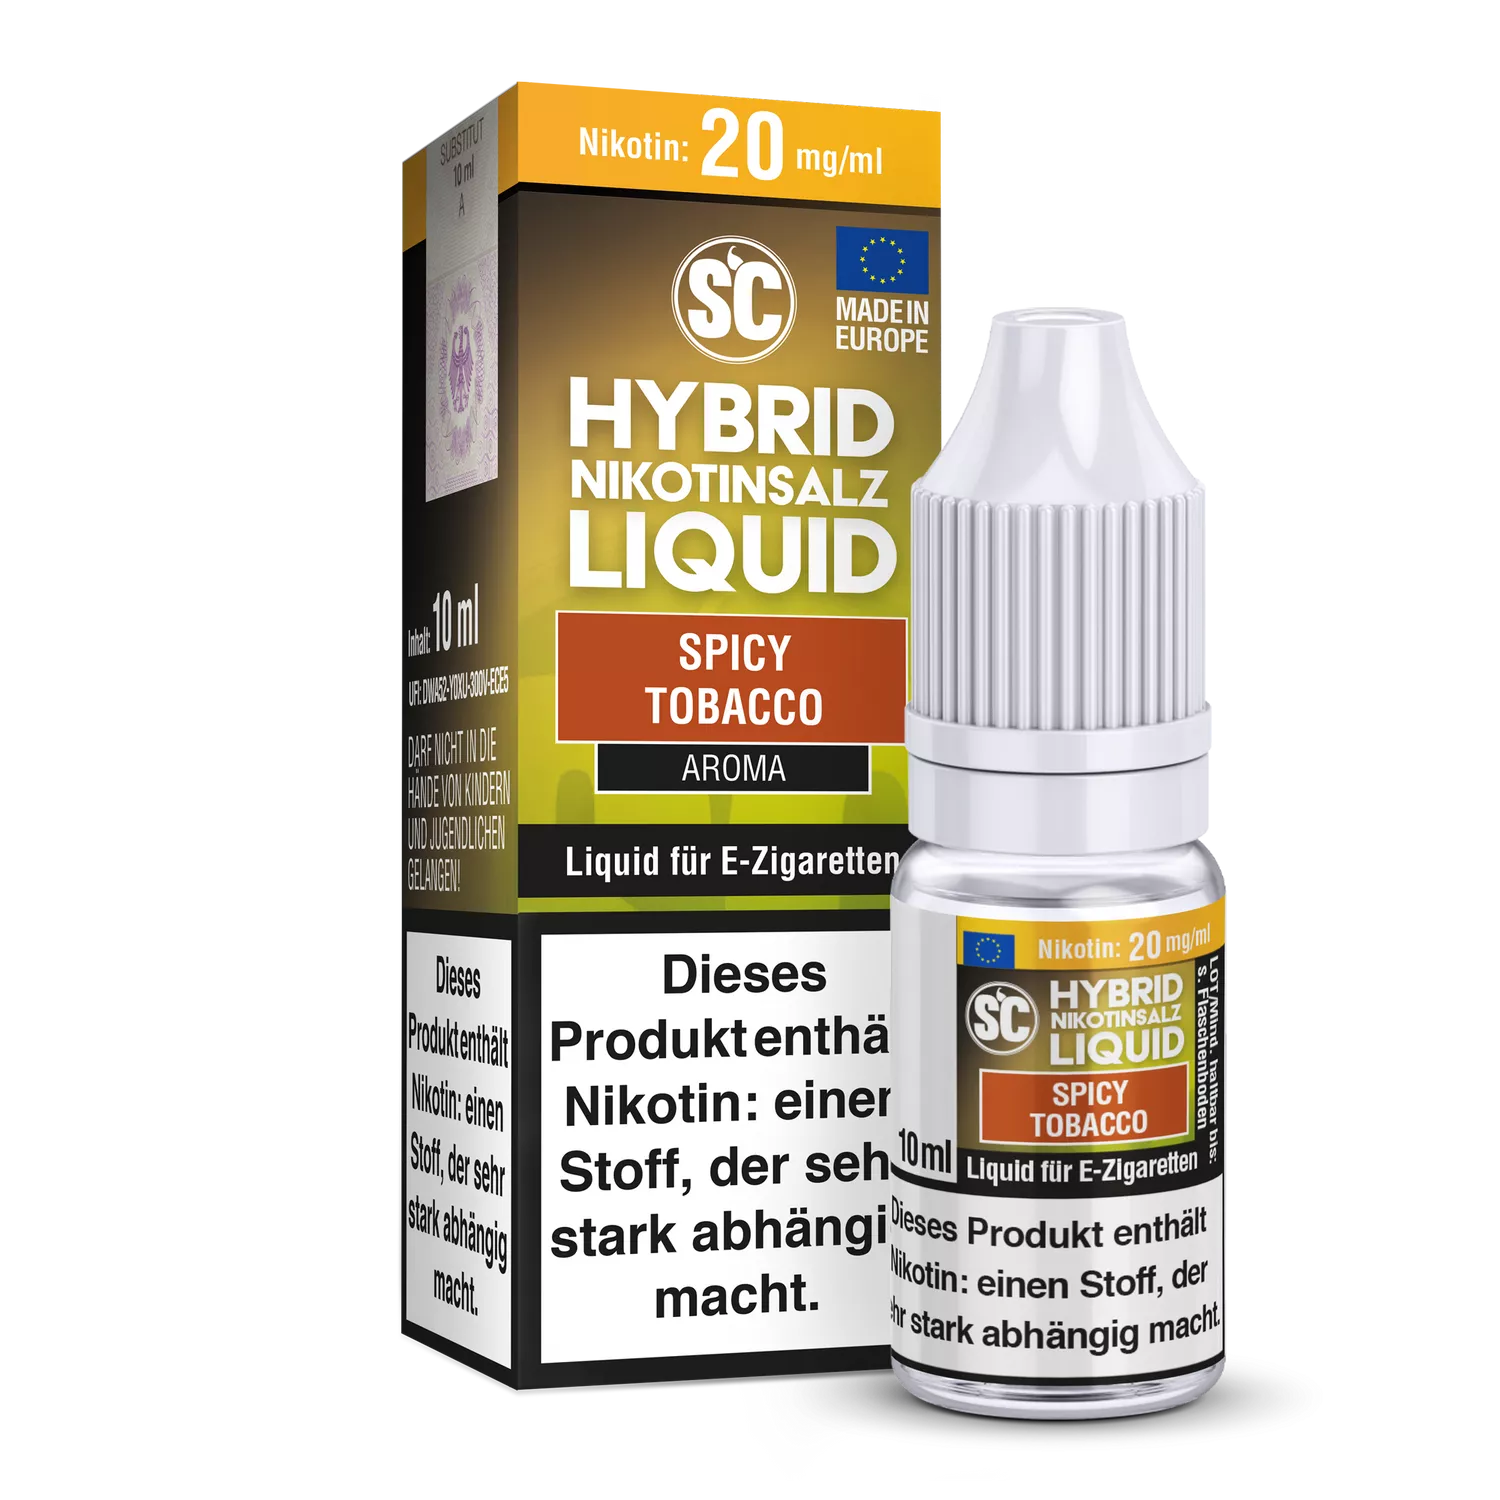 SC Hybrid Nikotinsalz Liquid Spicy Tobacco - 20mg/ml